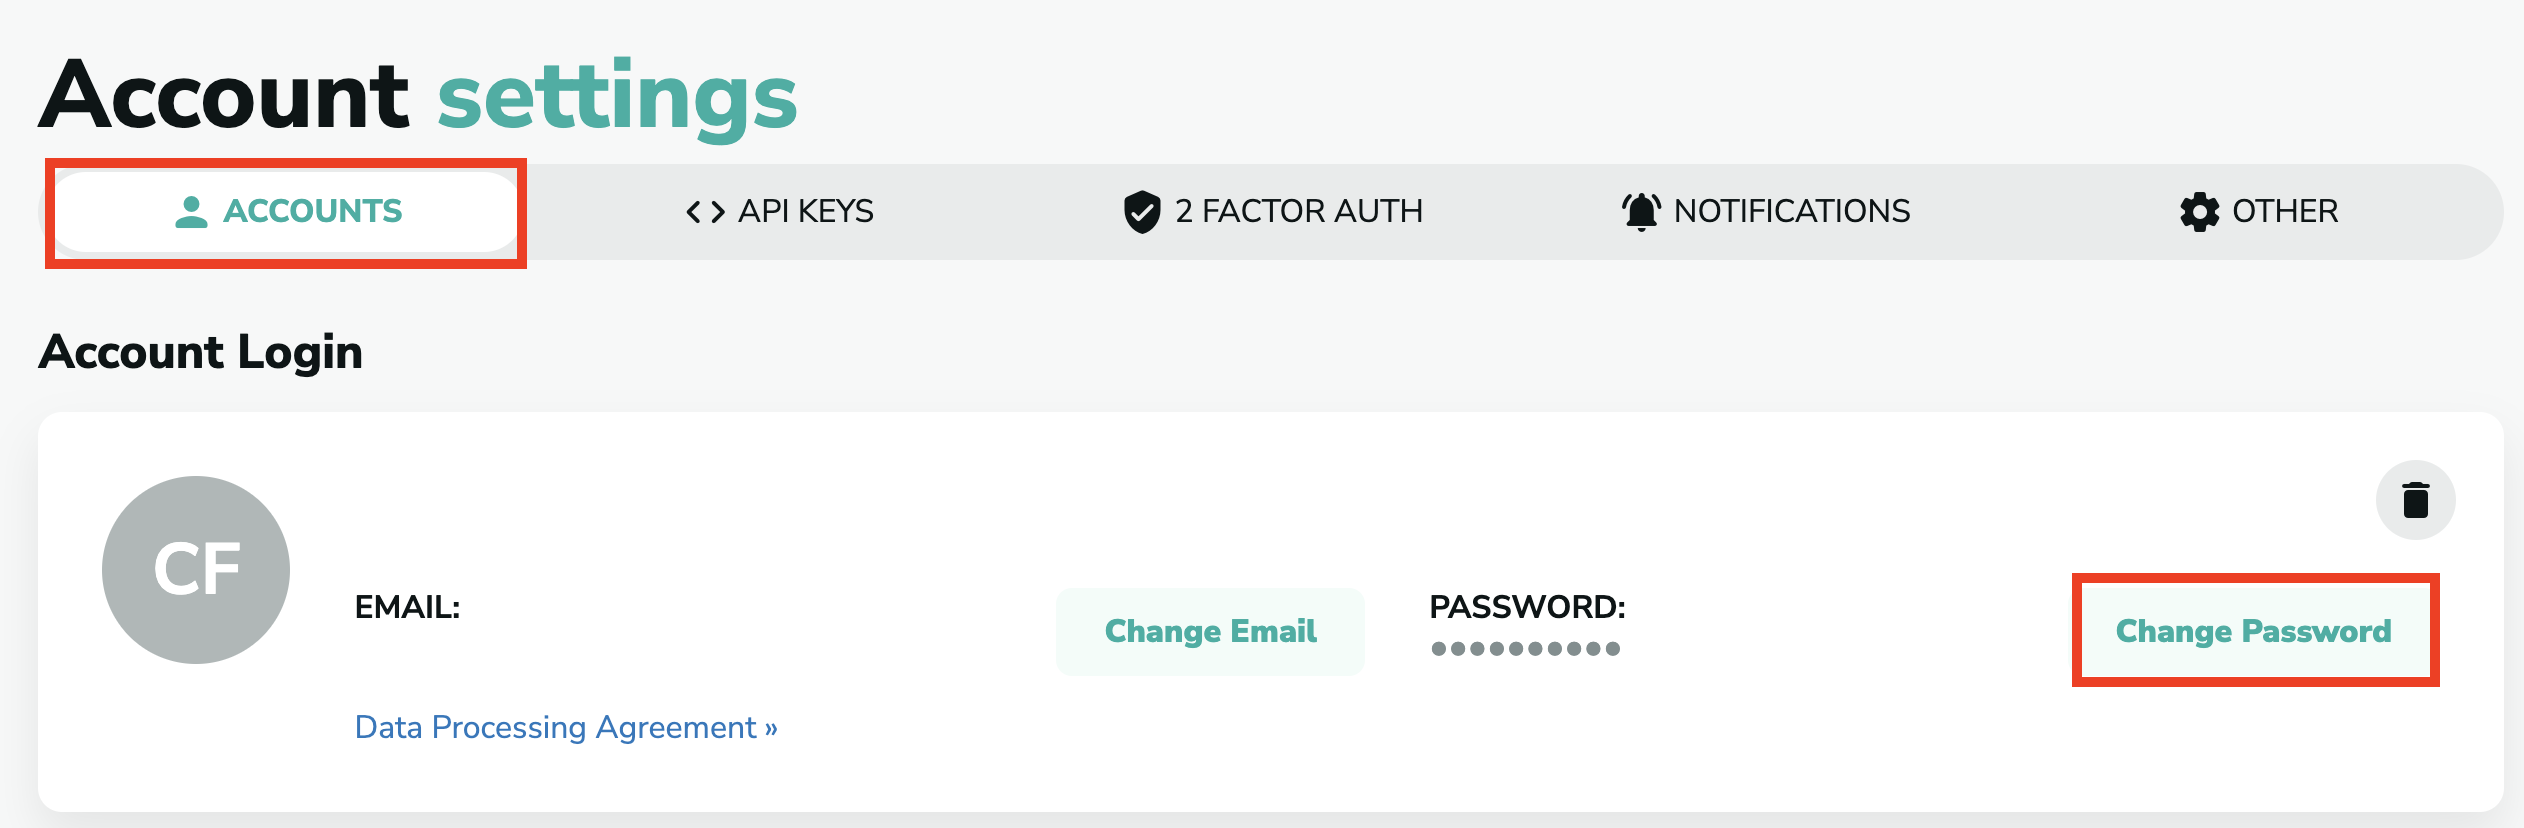 Change your password in MillionVerifier Account settings